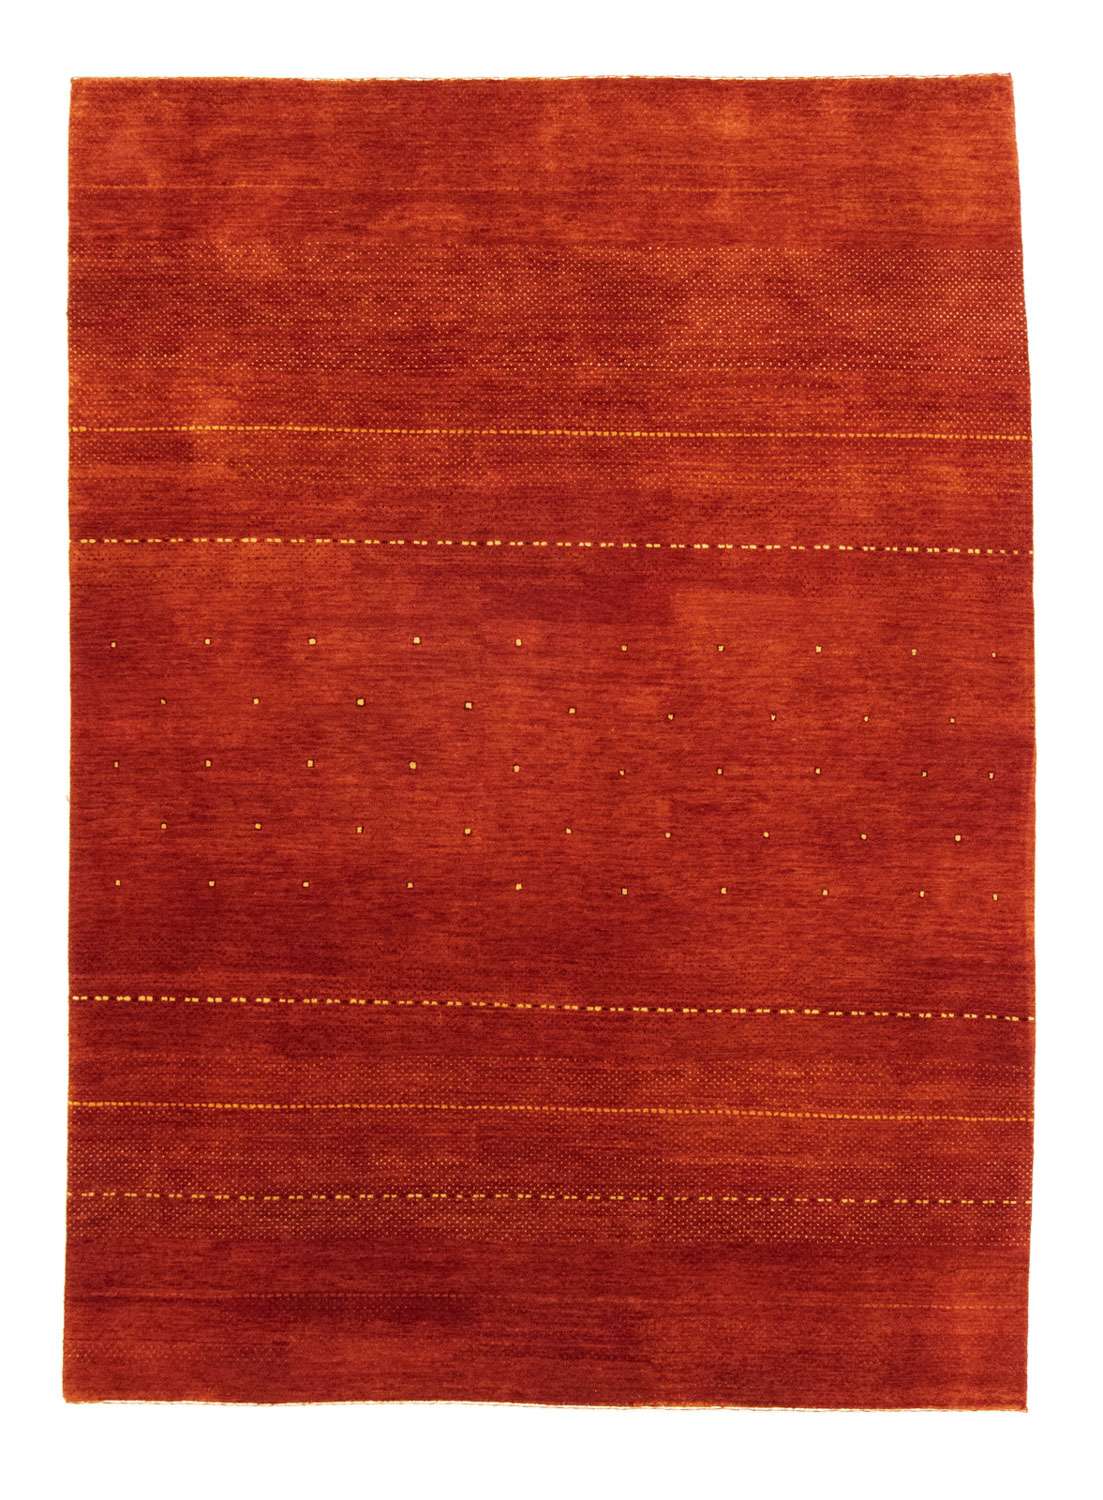 Gabbeh tapijt - Indus - 234 x 171 cm - rood